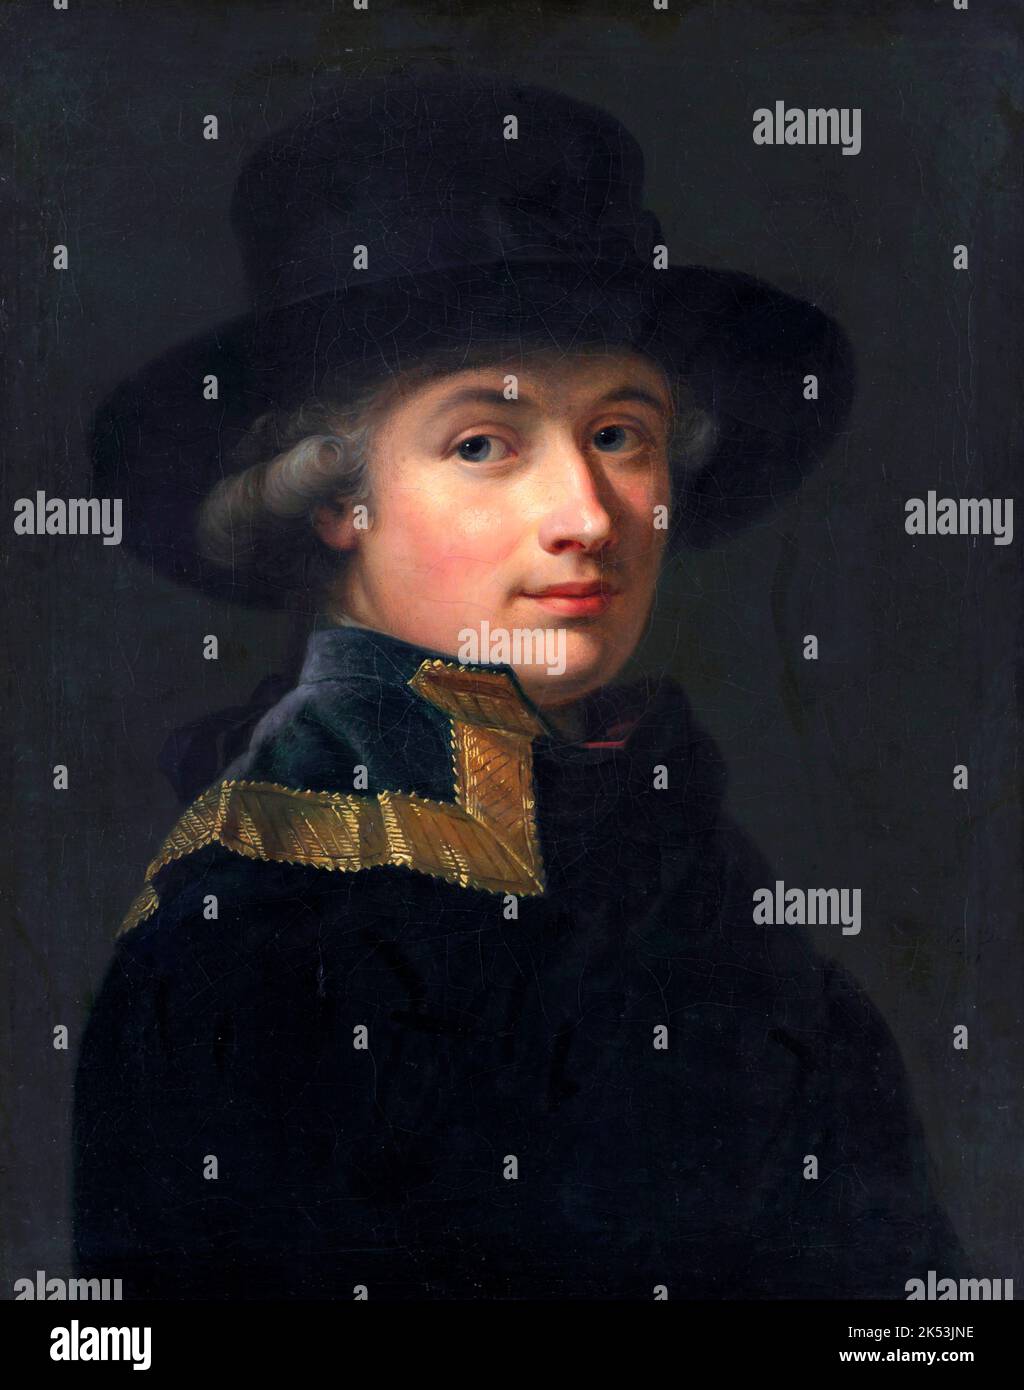 Wilhelm Bottner, autoritratto. Wilhelm Böttner (1752 - 1805) pittore tardo barocco e primo classicista. Foto Stock